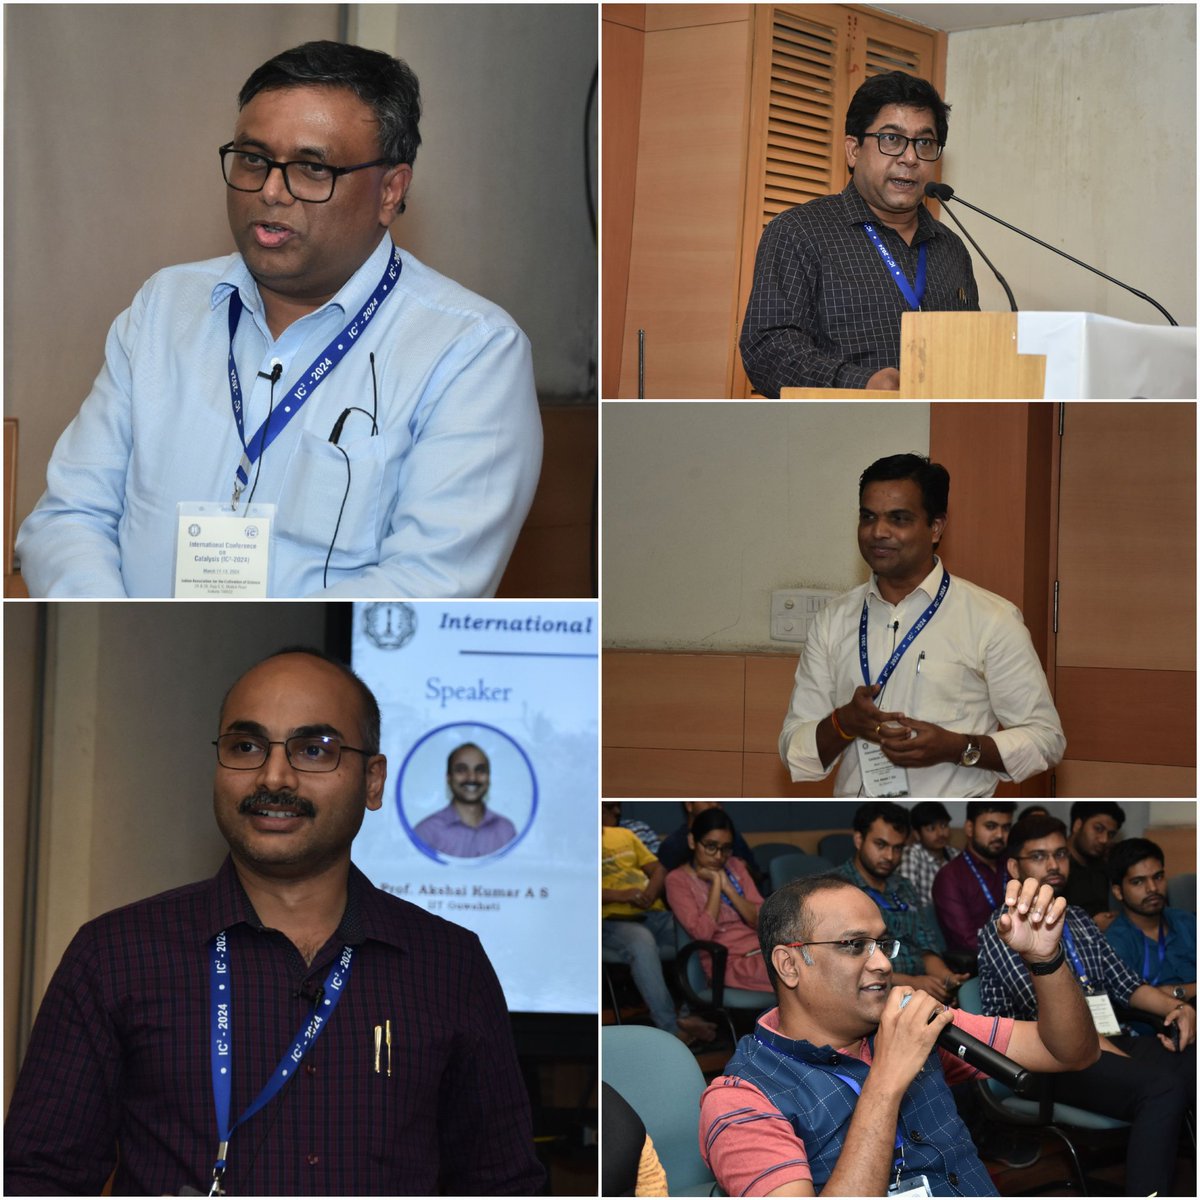 Final session of day 2 , @IC22024 Session 9 was chaired by Prof. Suhrit Ghosh @iacskolkata @KumarVanka1 @ATBijuLab @iiscbangalore , Prof. Akshai Kumar A S @IITGuwahati